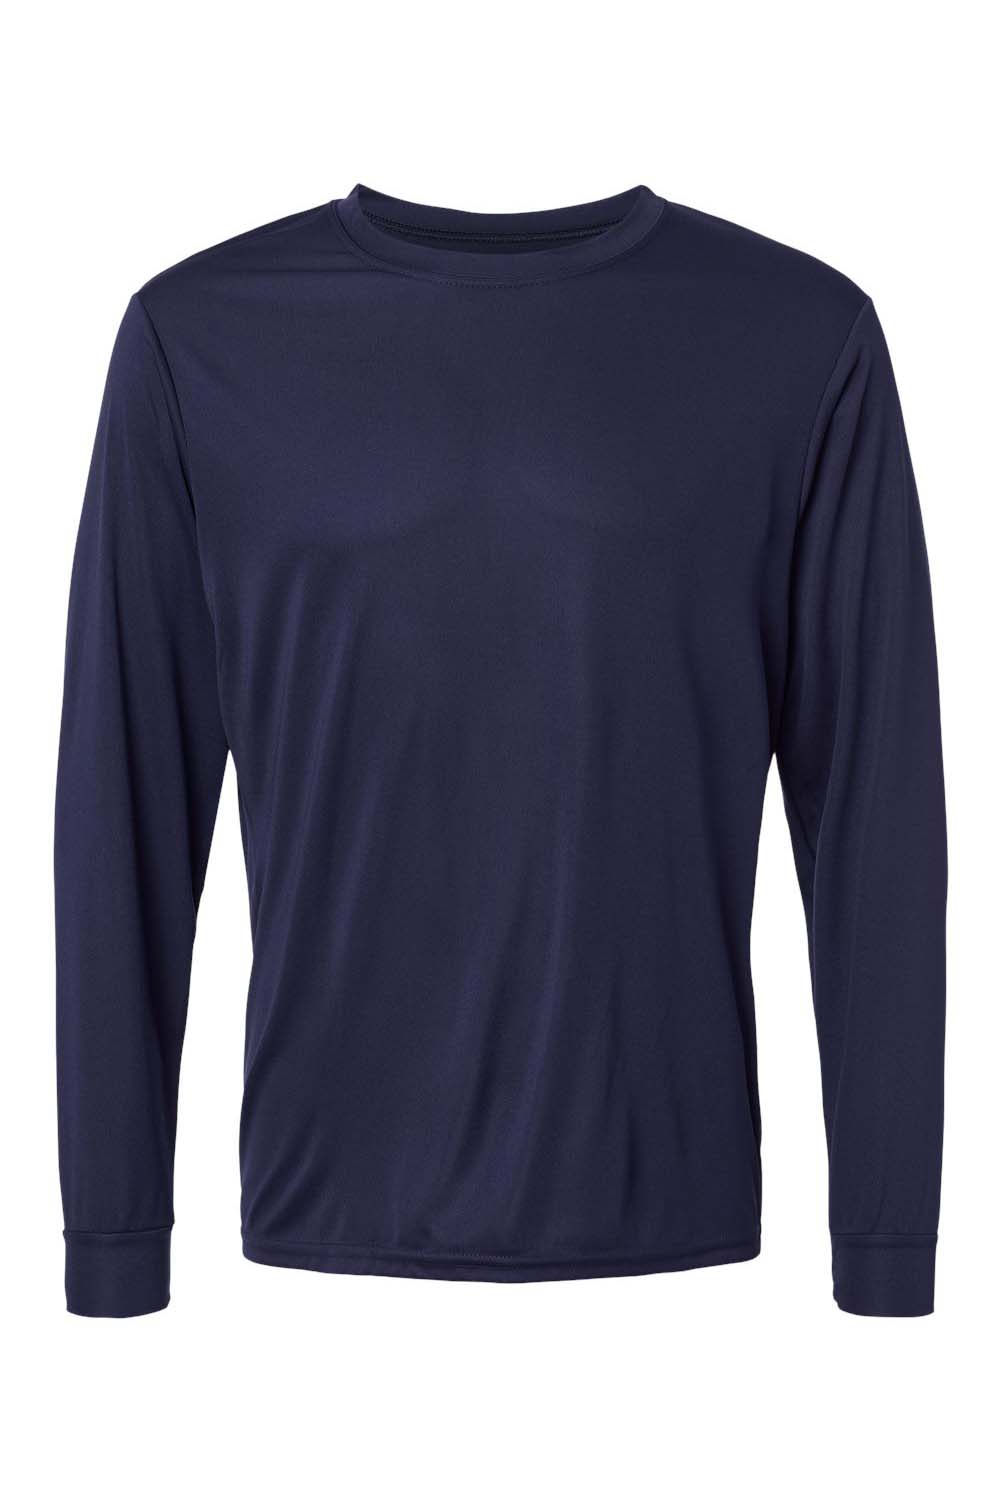 Augusta Sportswear 788 Mens Moisture Wicking Long Sleeve Crewneck T-Shirt Navy Blue Model Flat Front